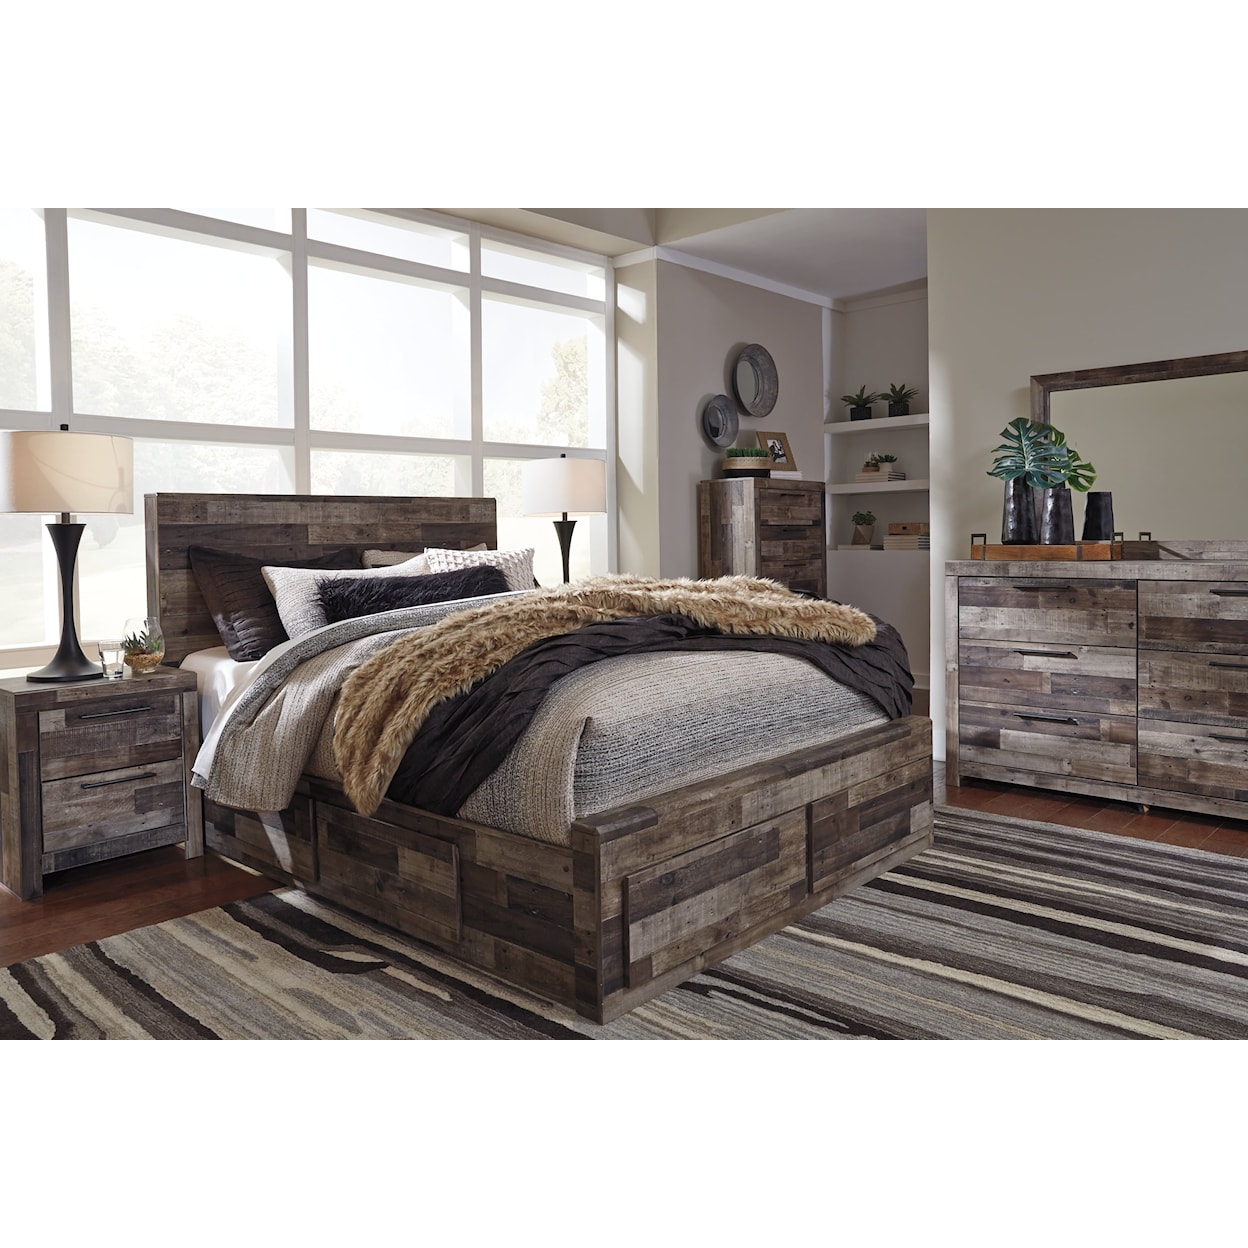 Ashley Furniture Benchcraft Derekson Queen Panel Bed with 4 Storage Drawers